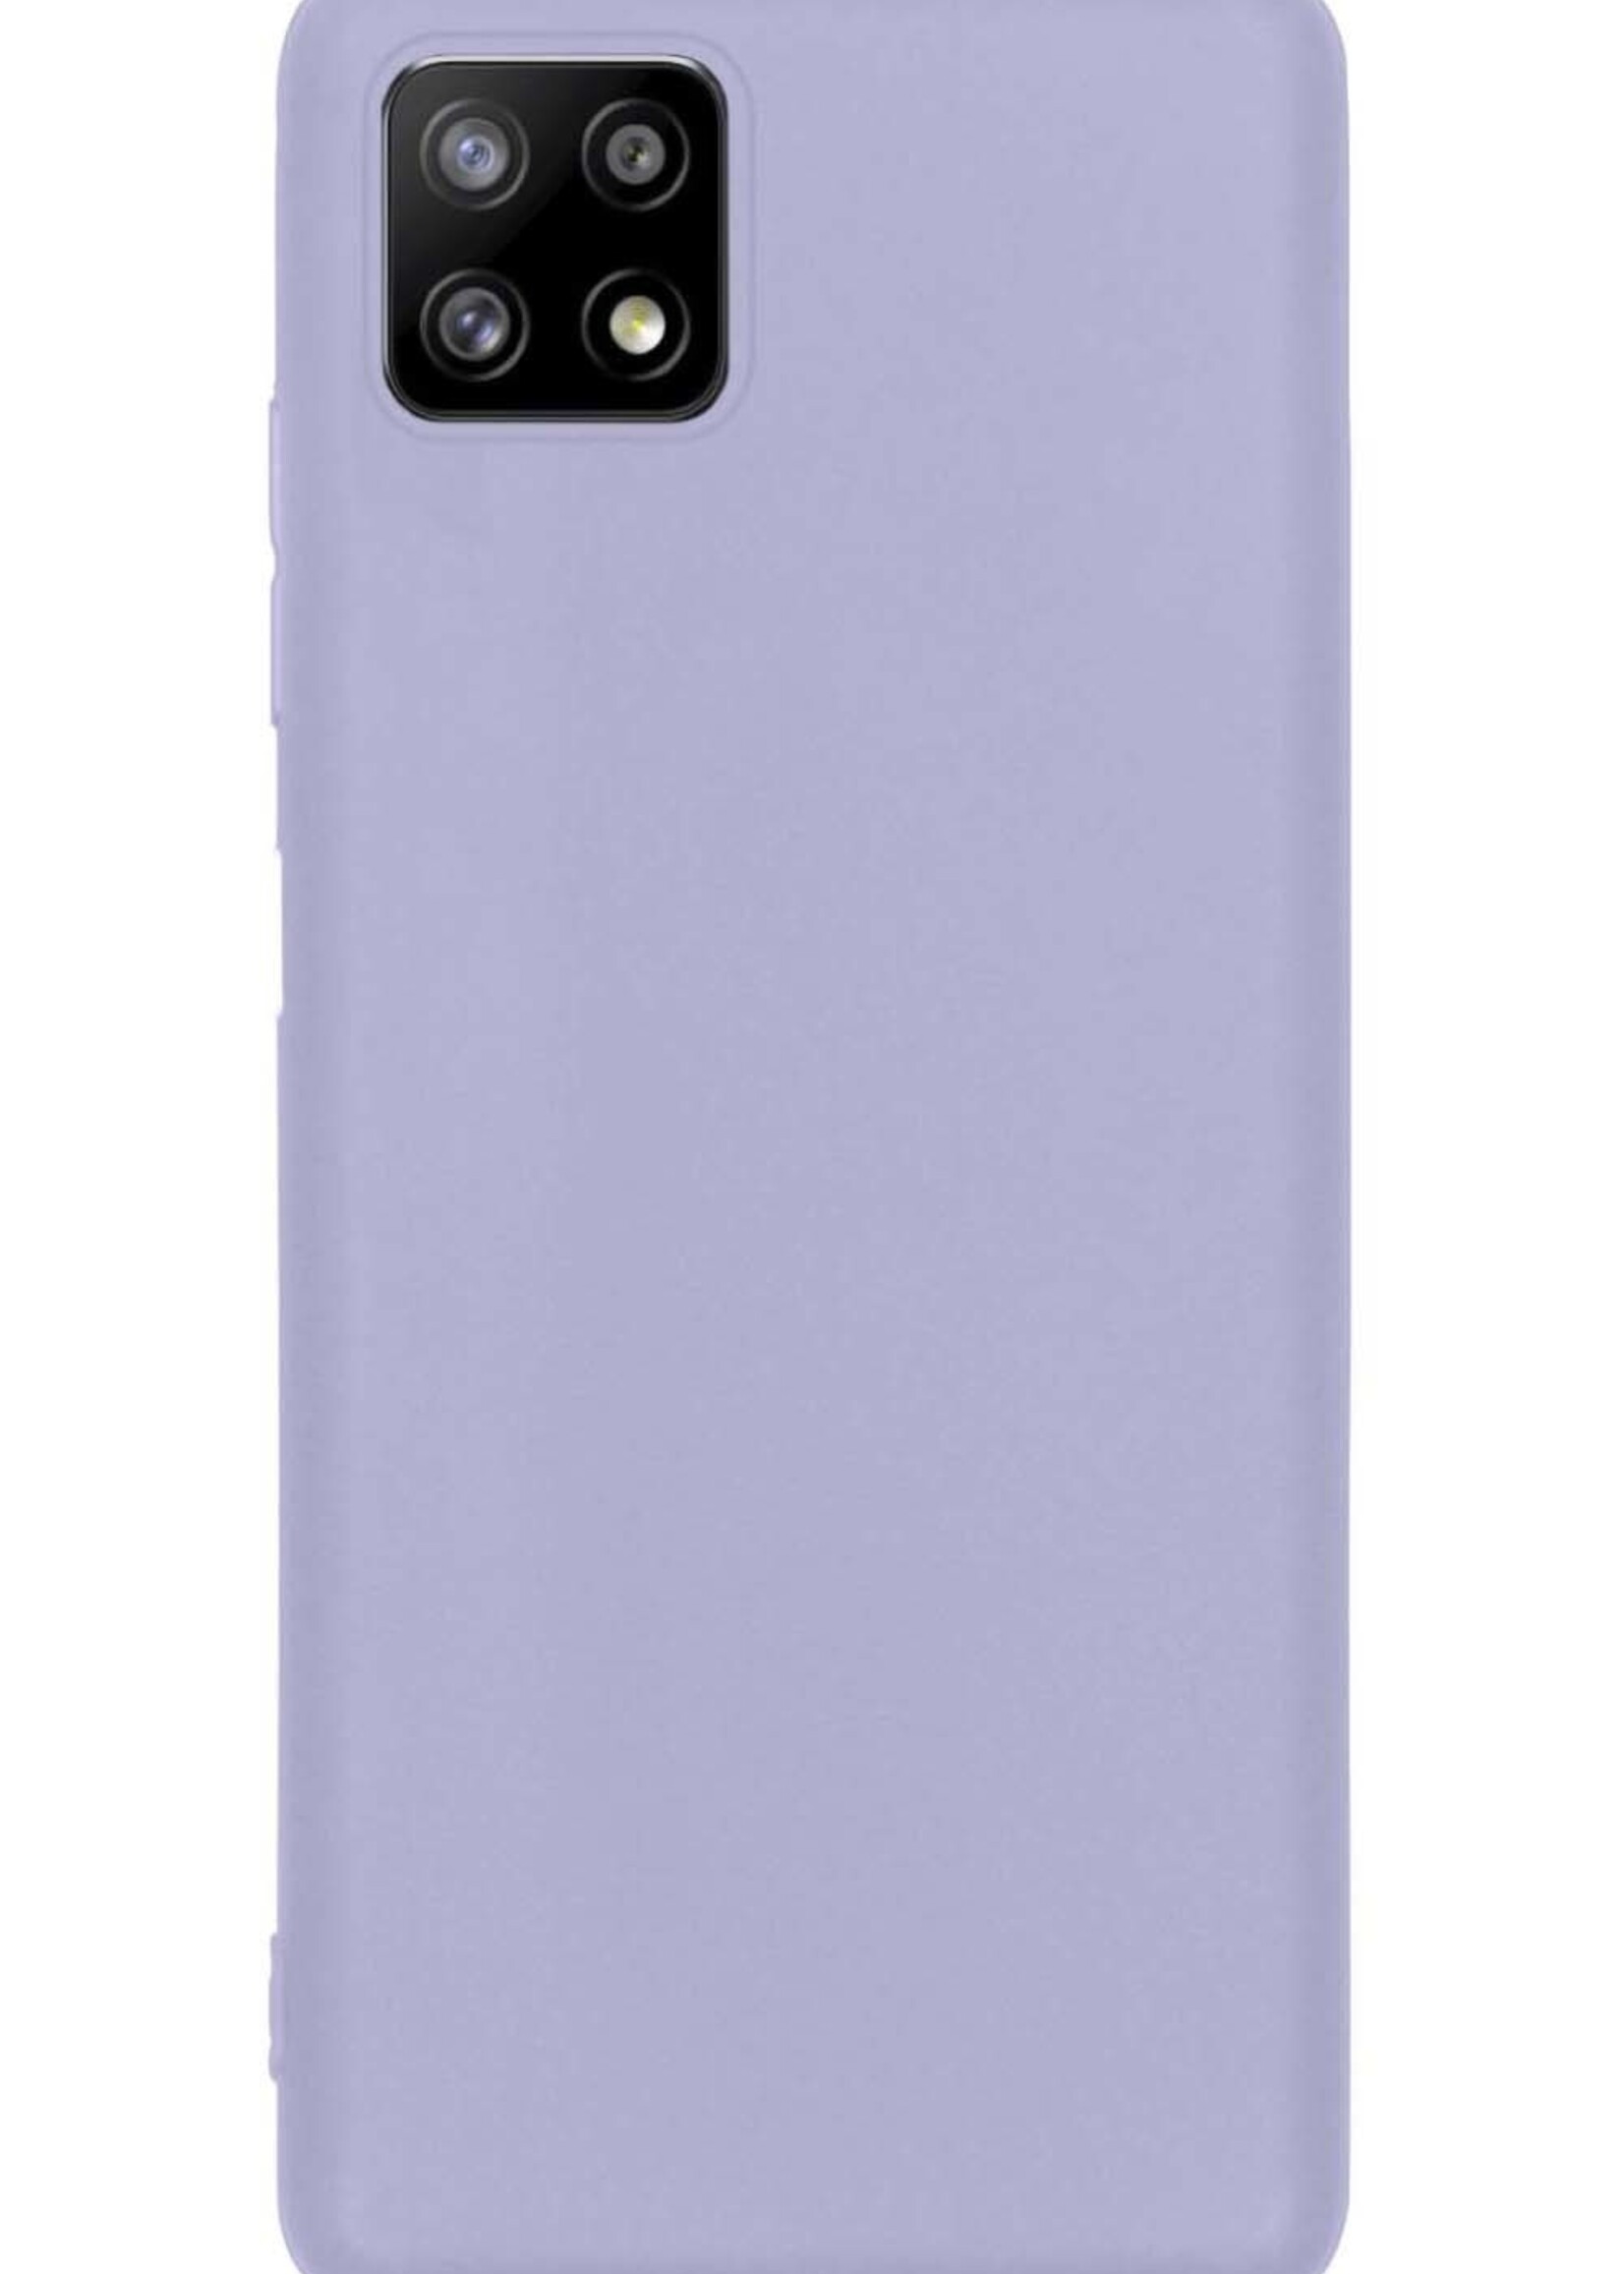 BTH Hoesje Geschikt voor Samsung M22 Hoesje Siliconen Case Hoes - Hoes Geschikt voor Samsung Galaxy M22 Hoes Cover Case - Lila - 2 PACK